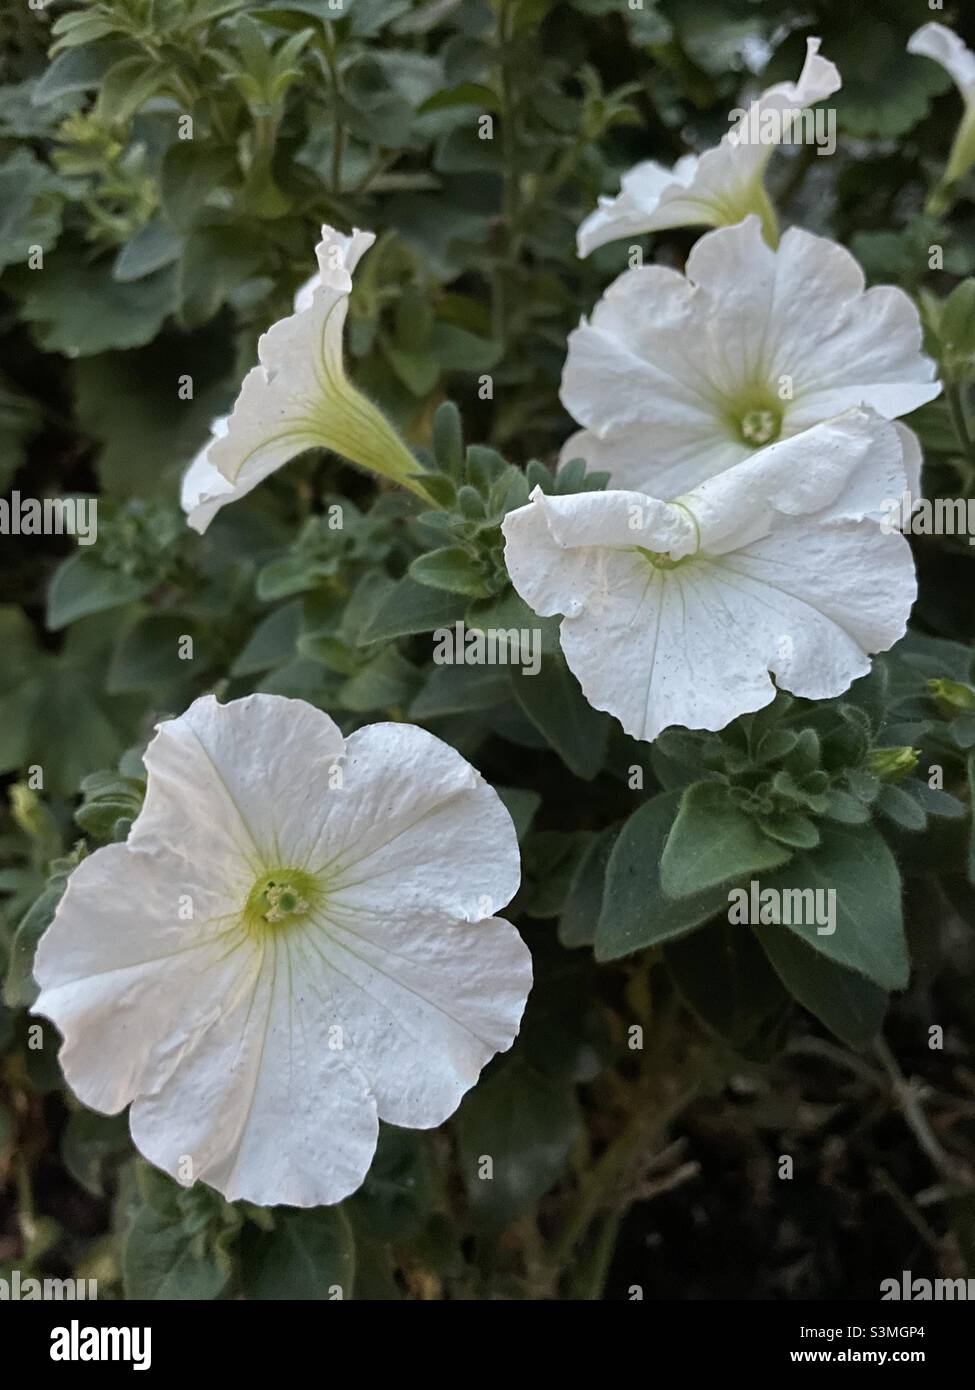 White flower blooms in a garden Stock Photo